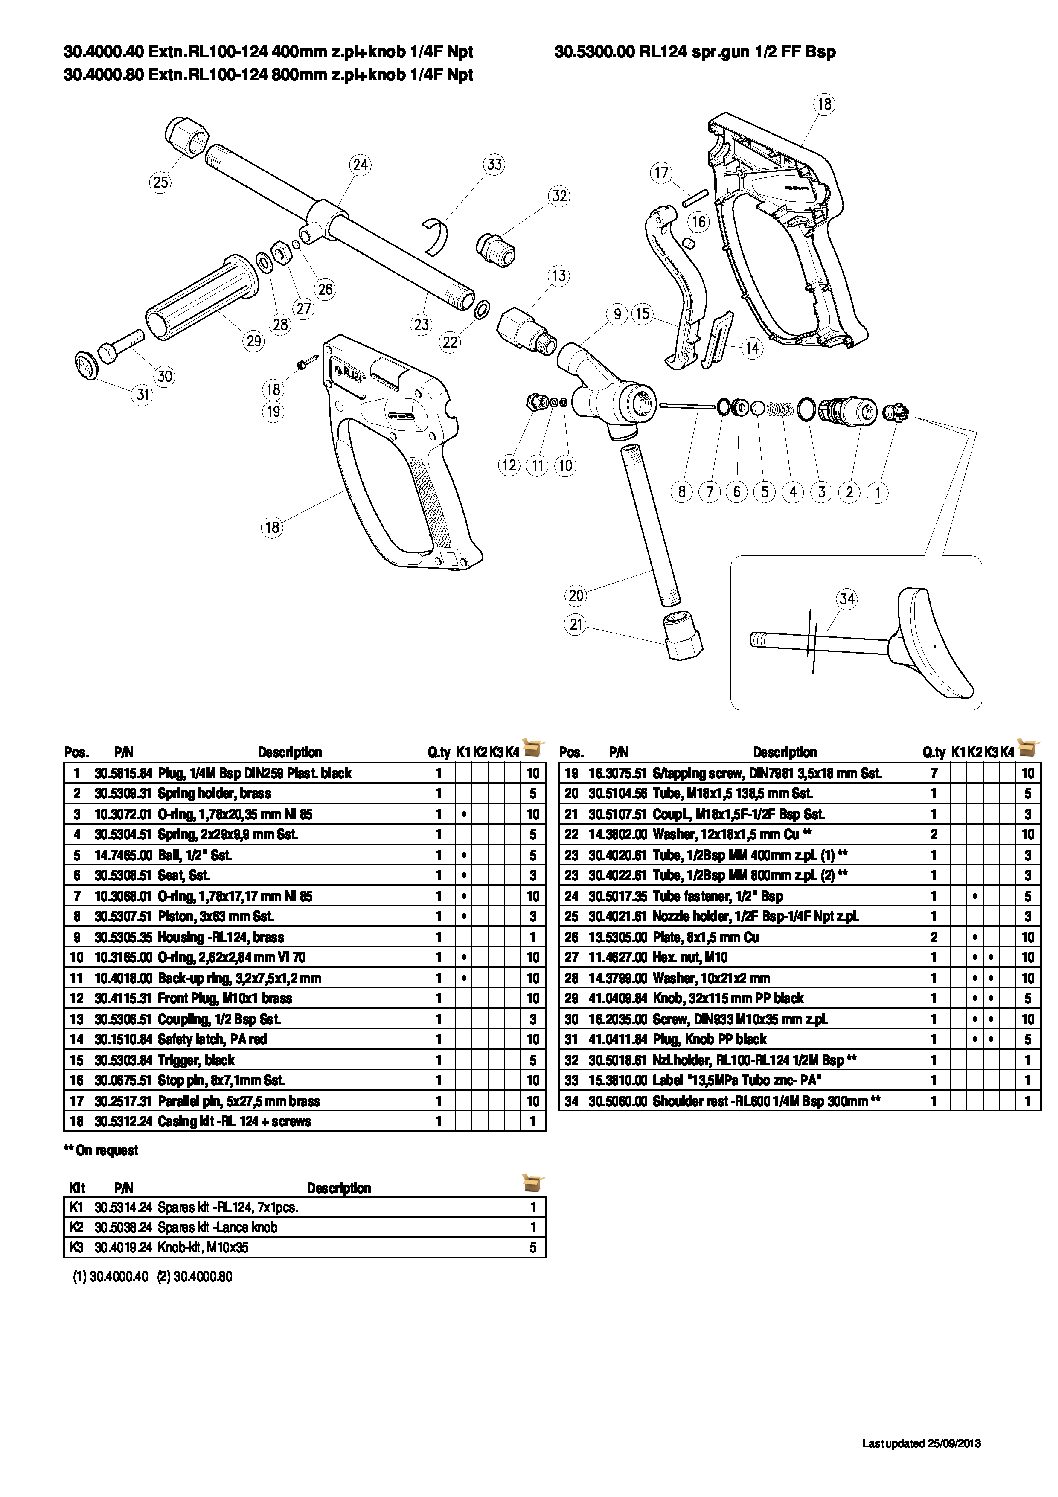 PA RL124 large flow spray gun parts breakdown